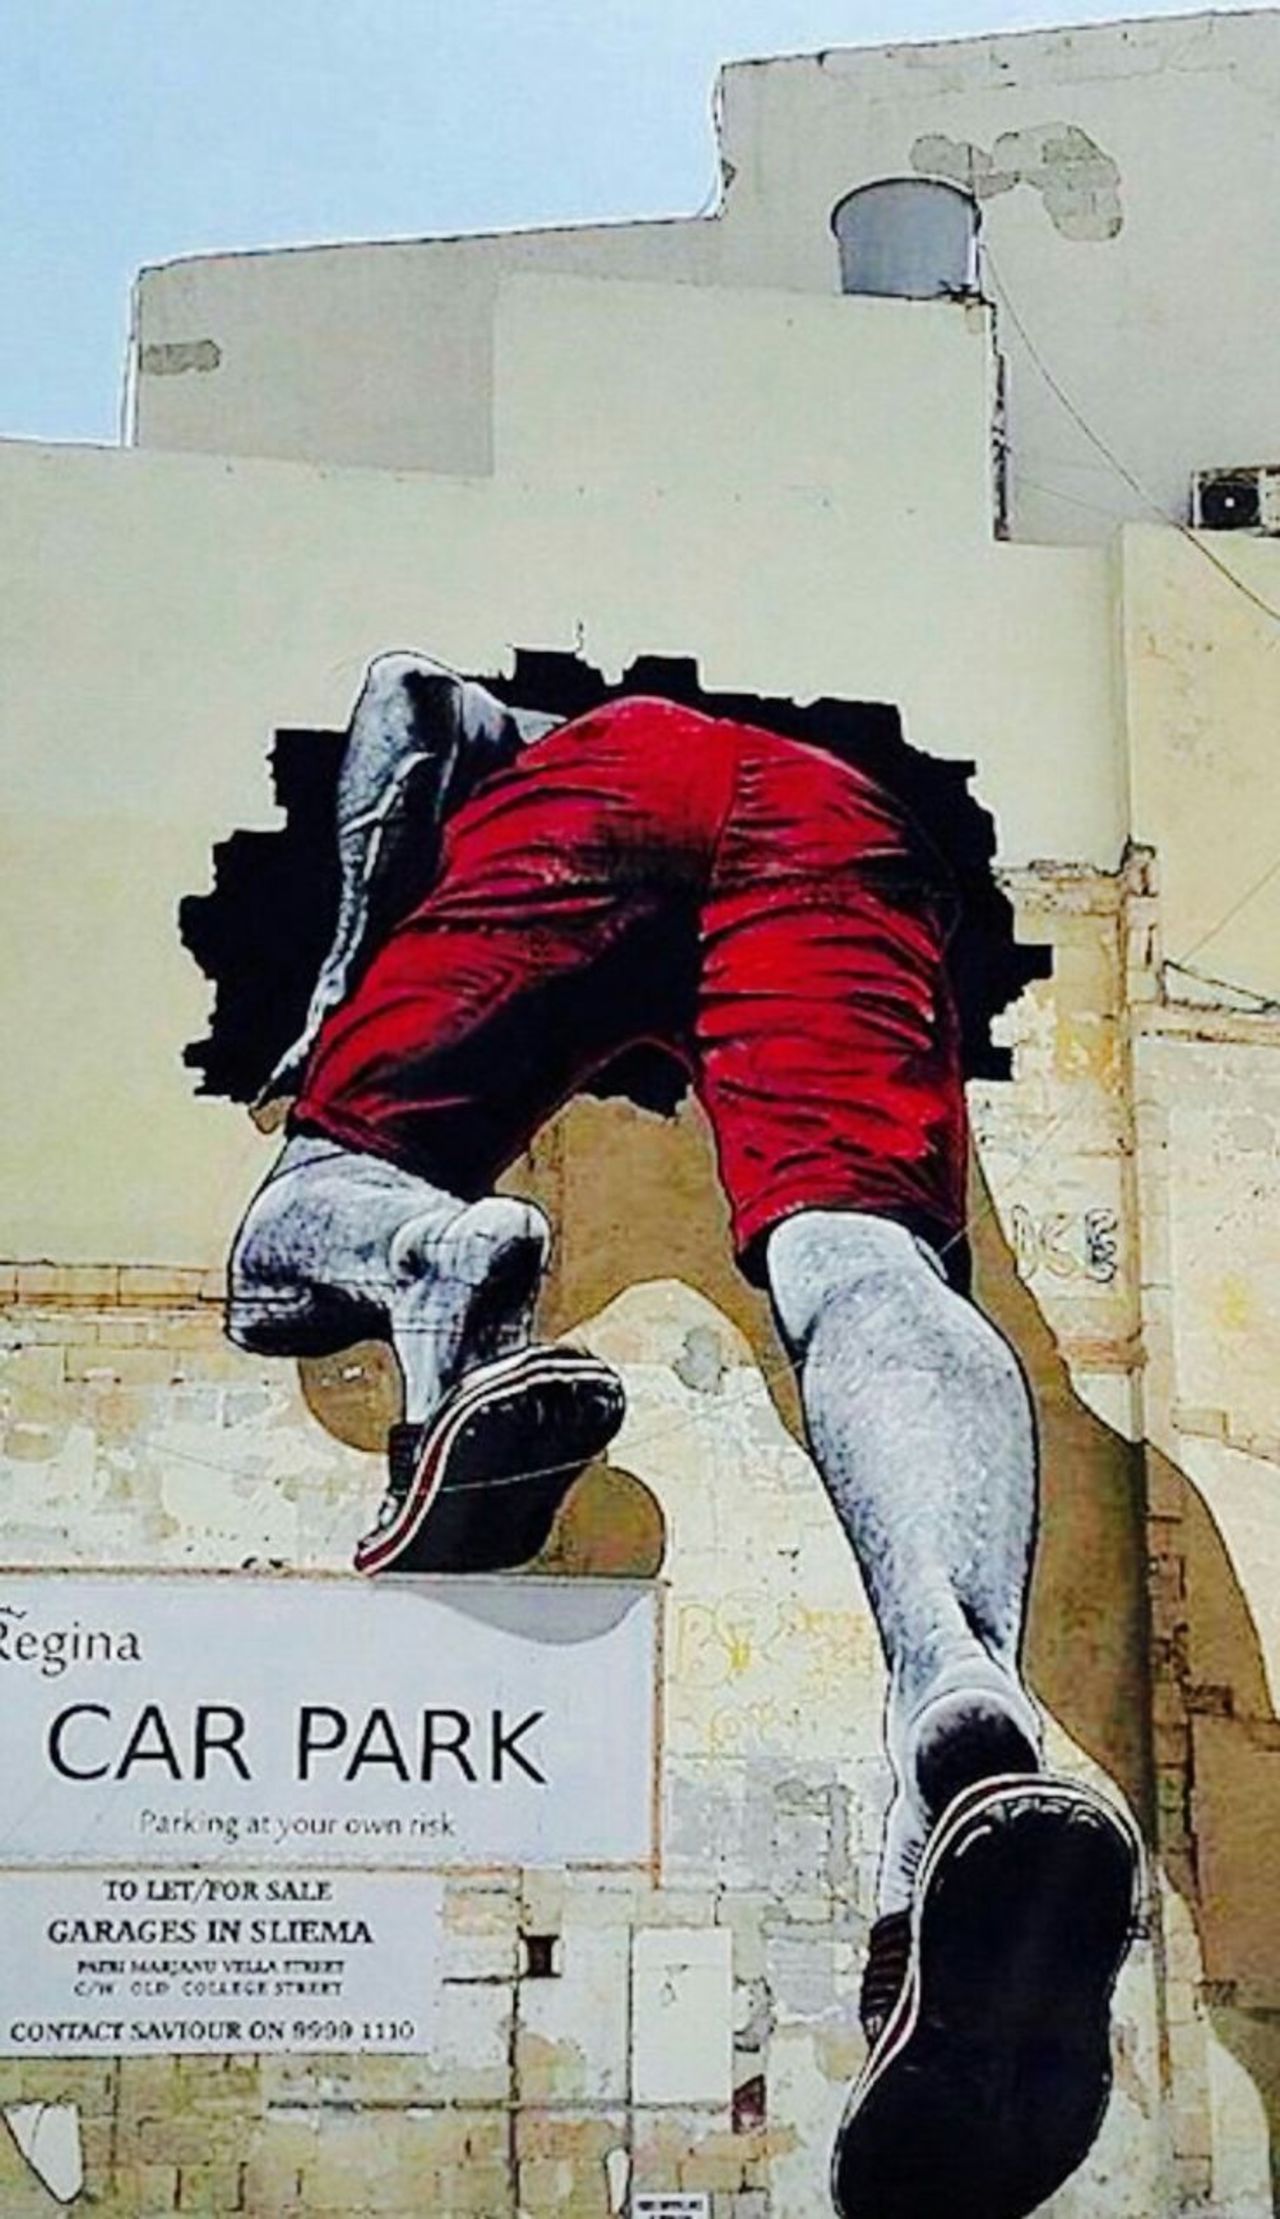 idk the artist#streetart #mural #graffiti #art https://t.co/tkV02bMXGU